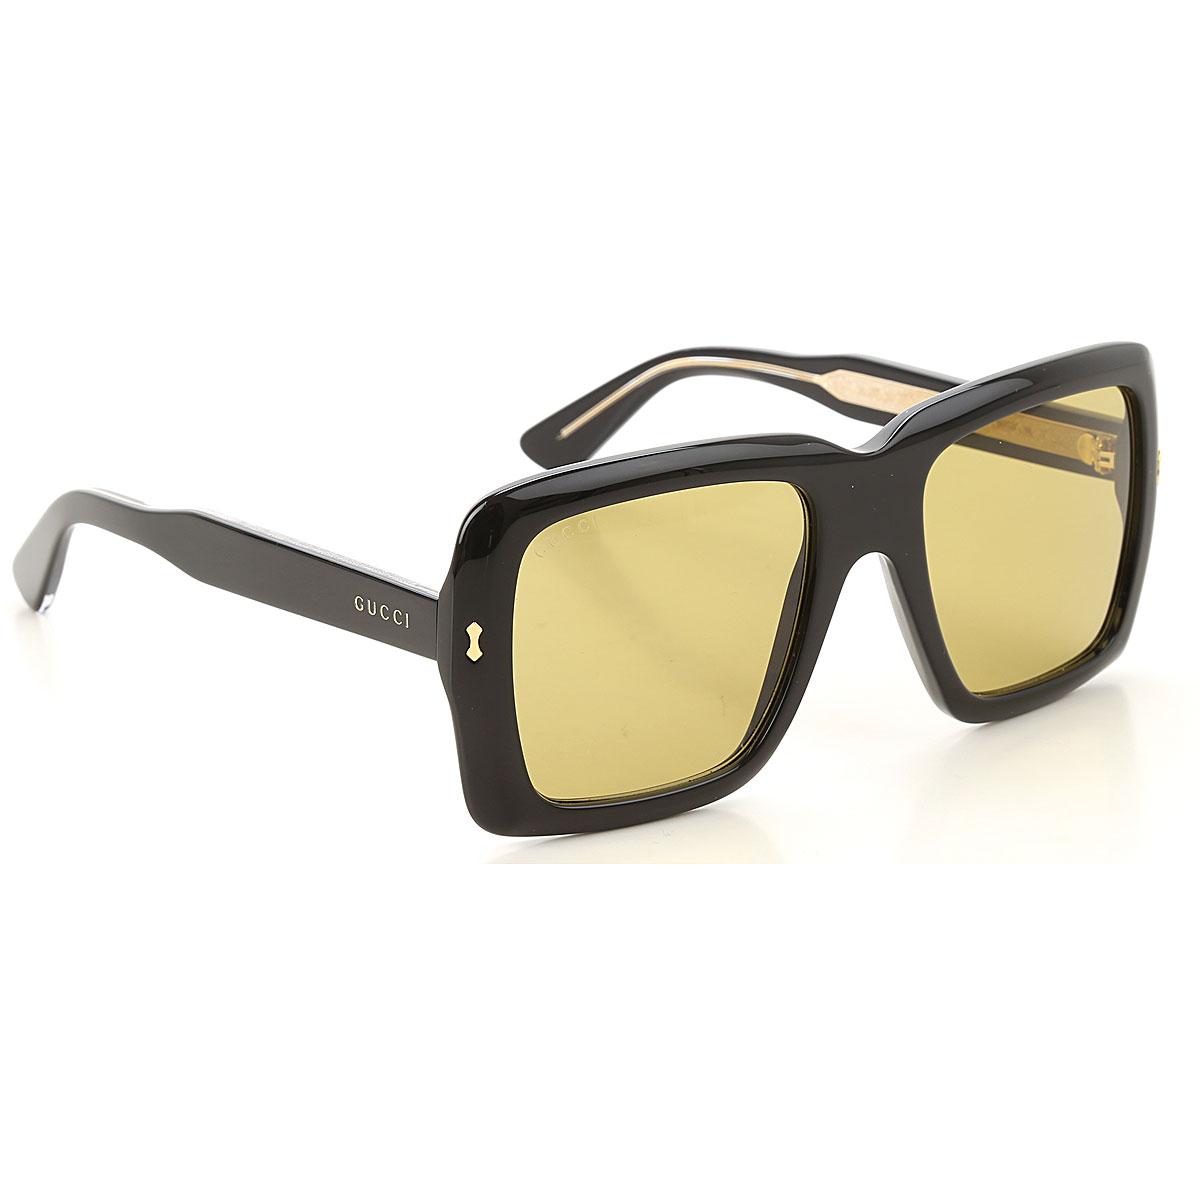 Gucci Sunglasses On Sale in Black - Lyst